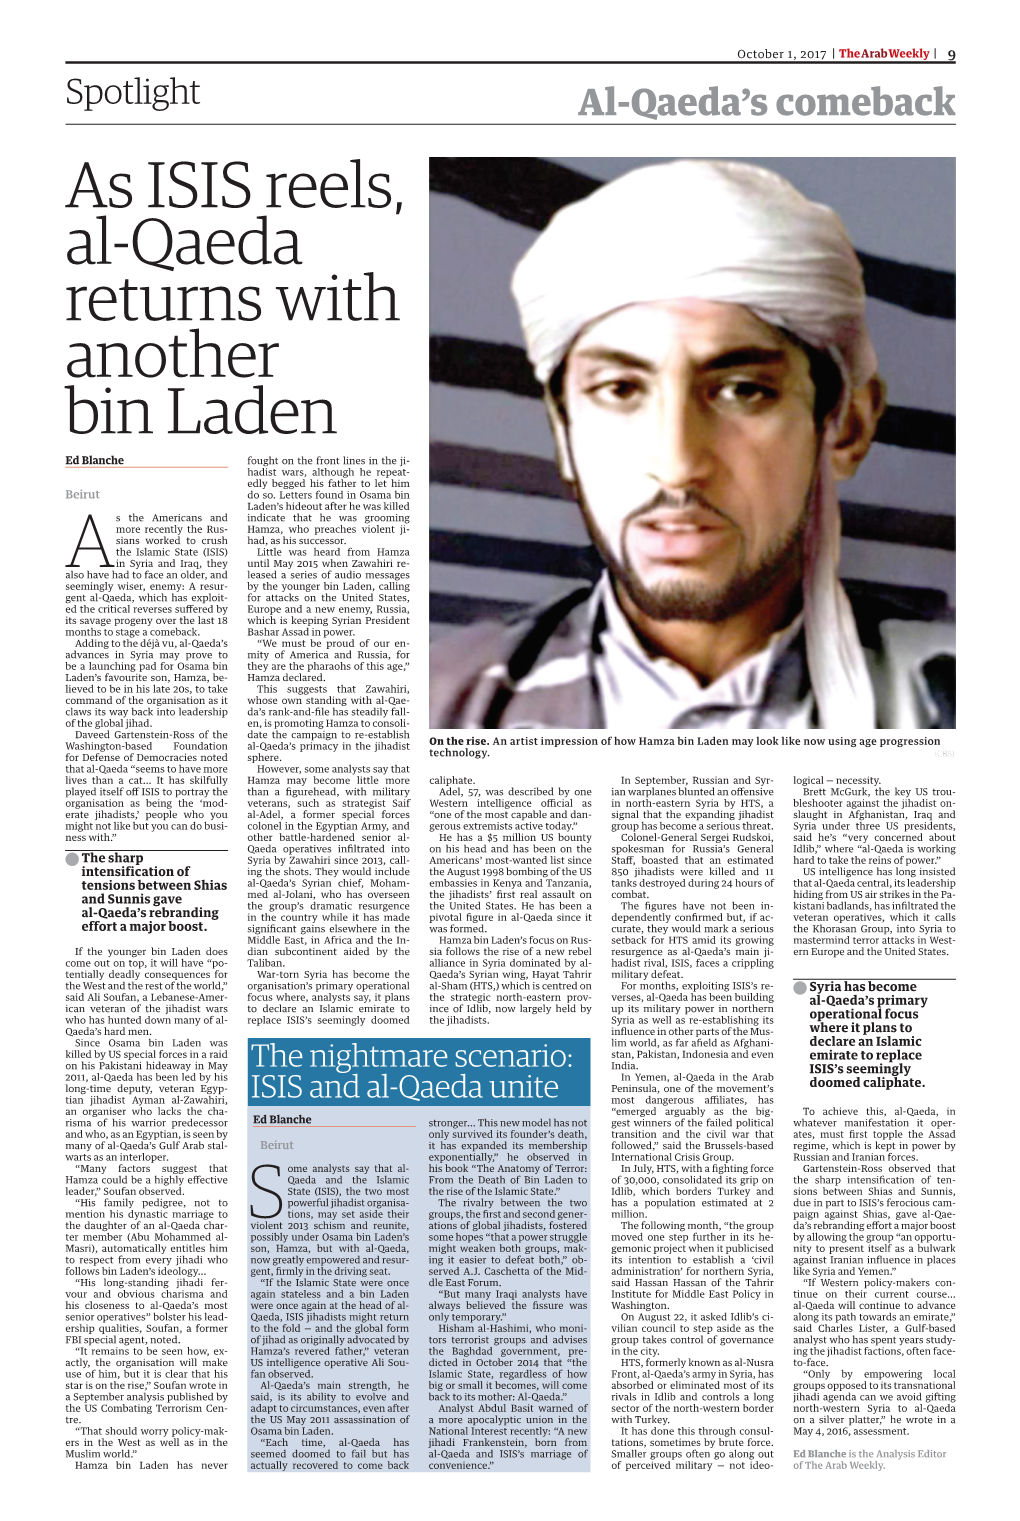 As ISIS Reels, Al-Qaeda Returns with Another Bin Laden